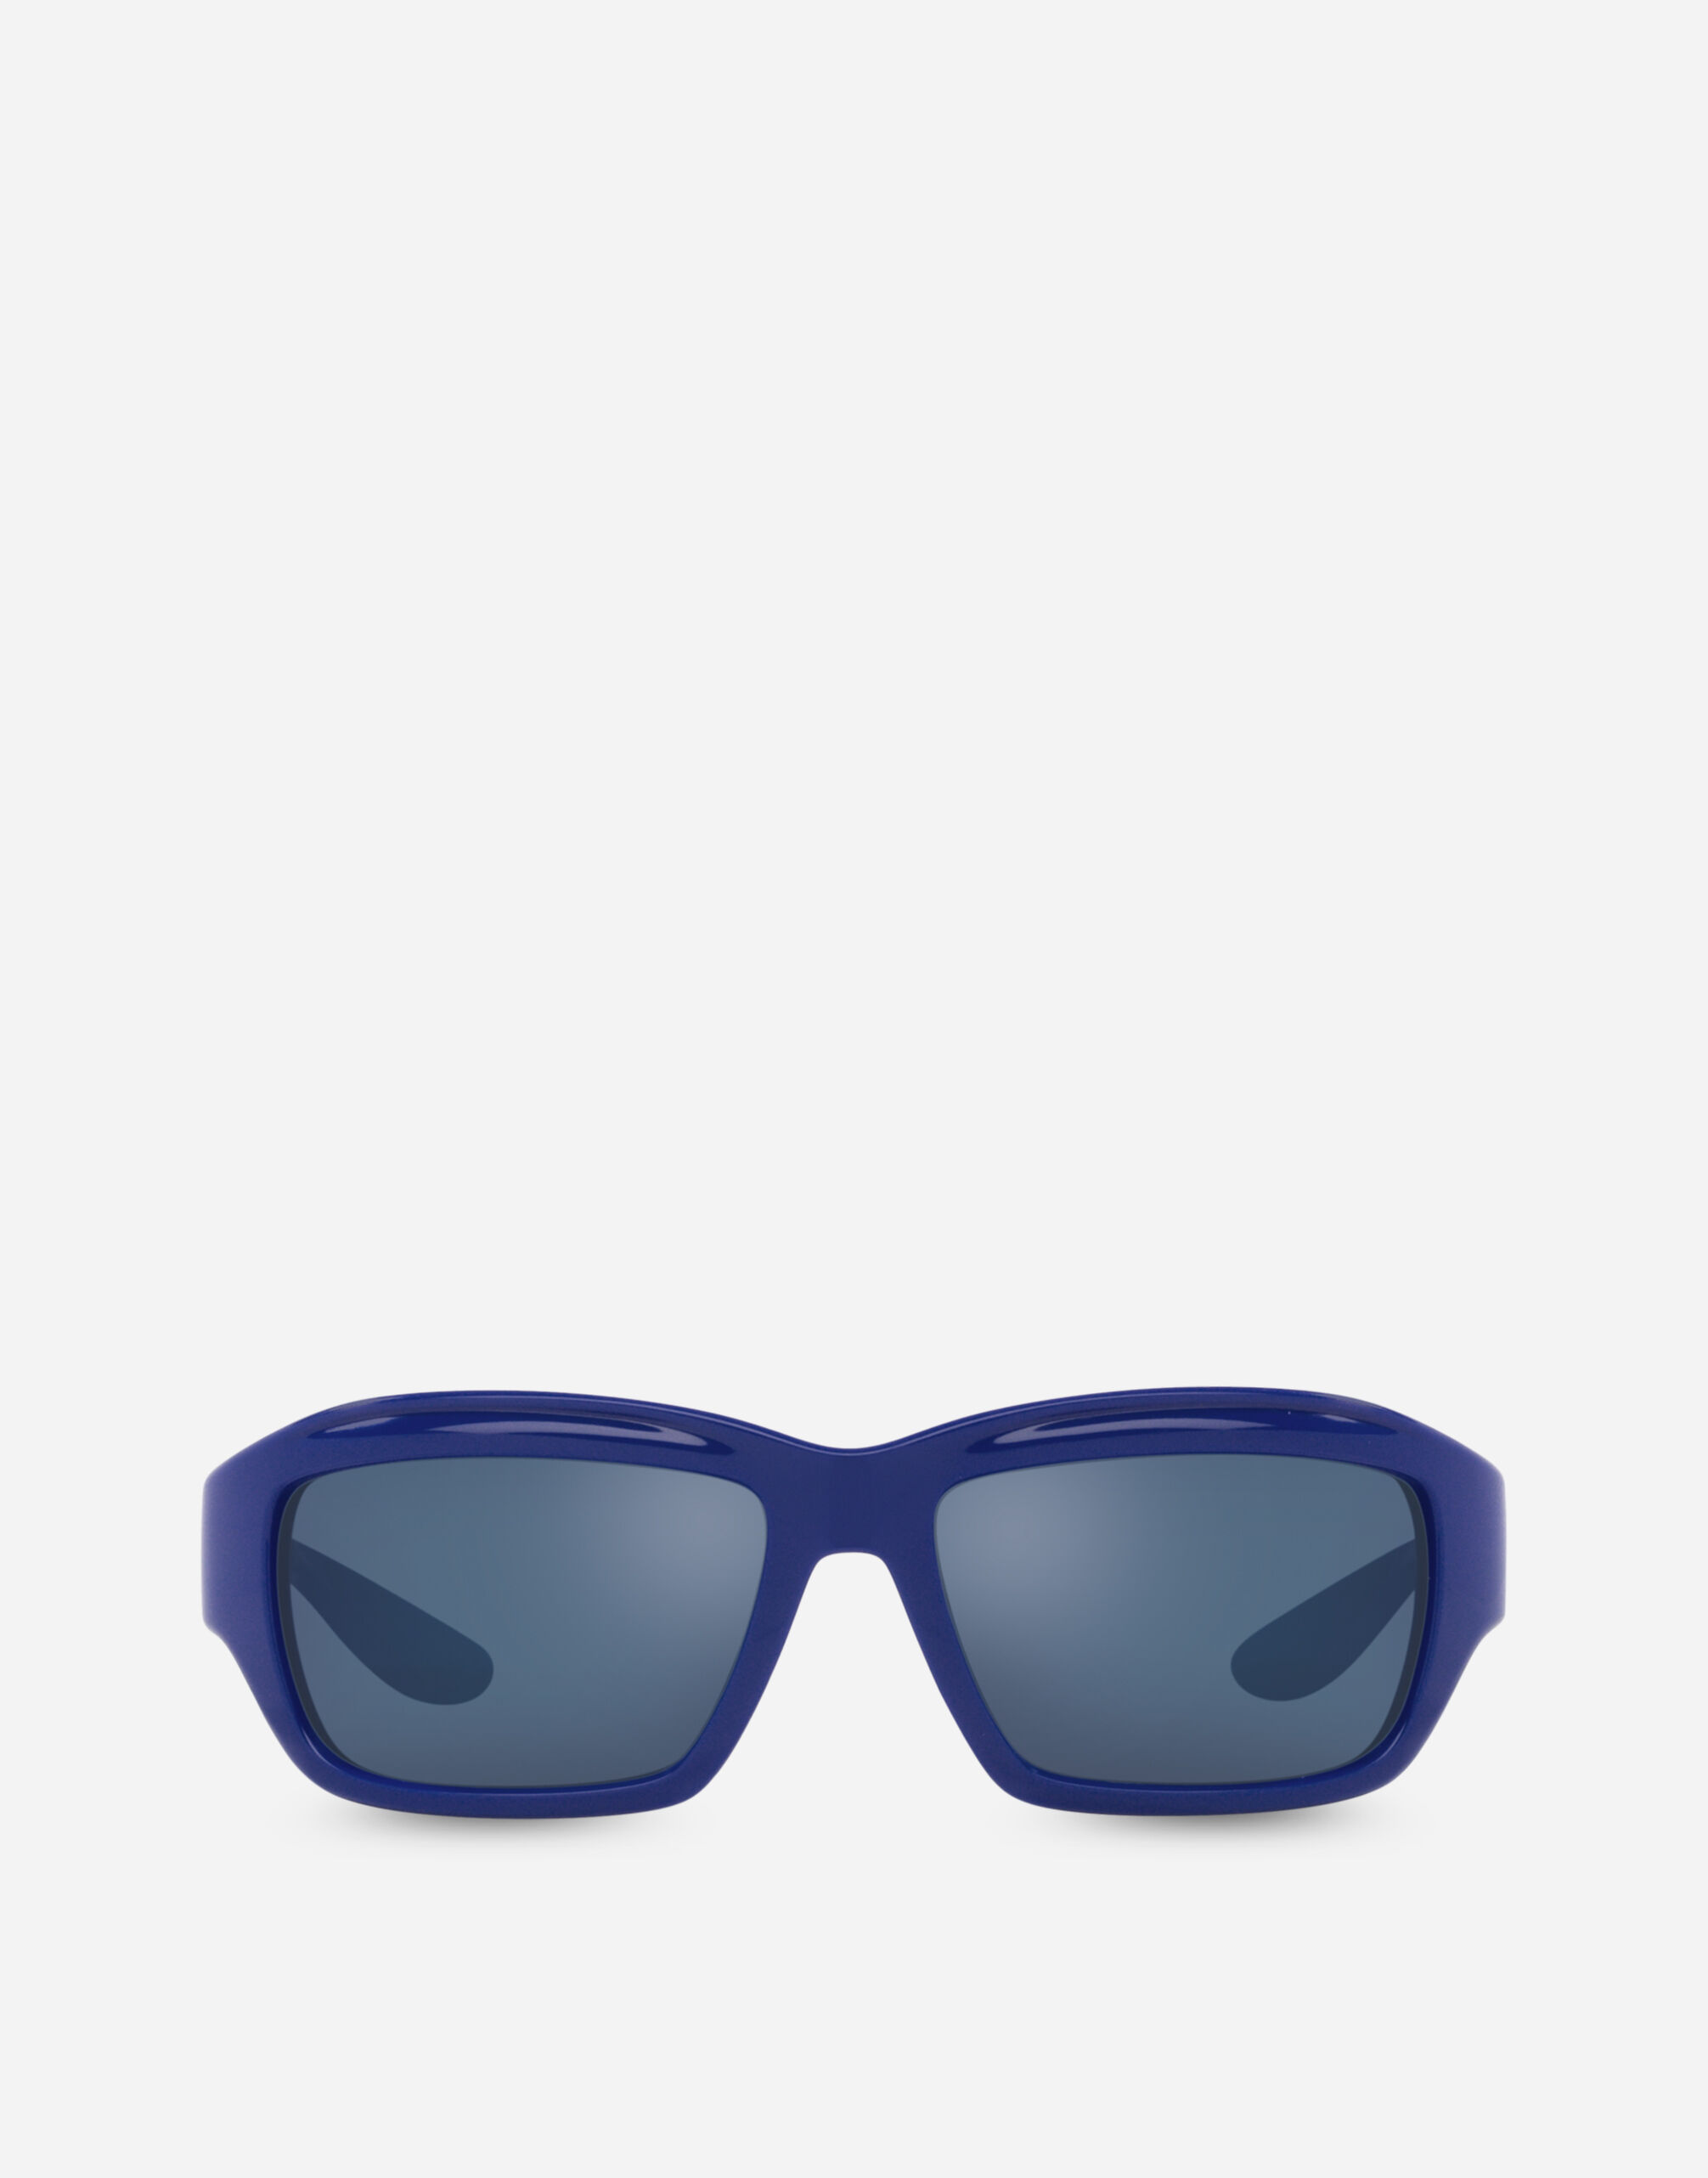 Dolce & Gabbana DG Toy sunglasses Blue VG2305VM580